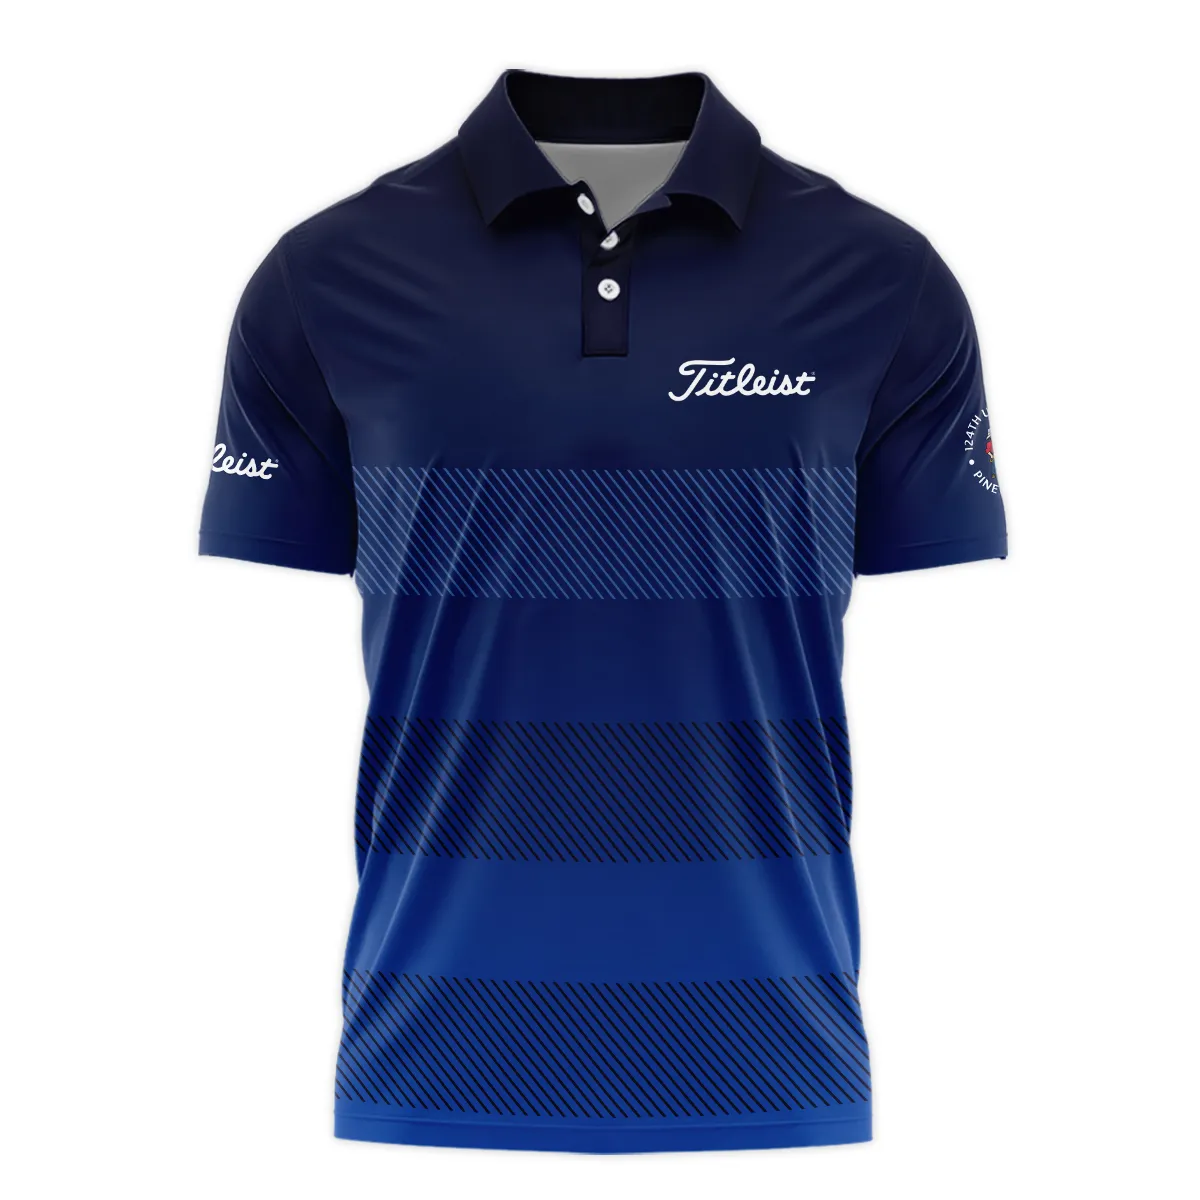 Titleist 124th U.S. Open Pinehurst Polo Shirt Sports Dark Blue Gradient Striped Pattern All Over Print Polo Shirt For Men